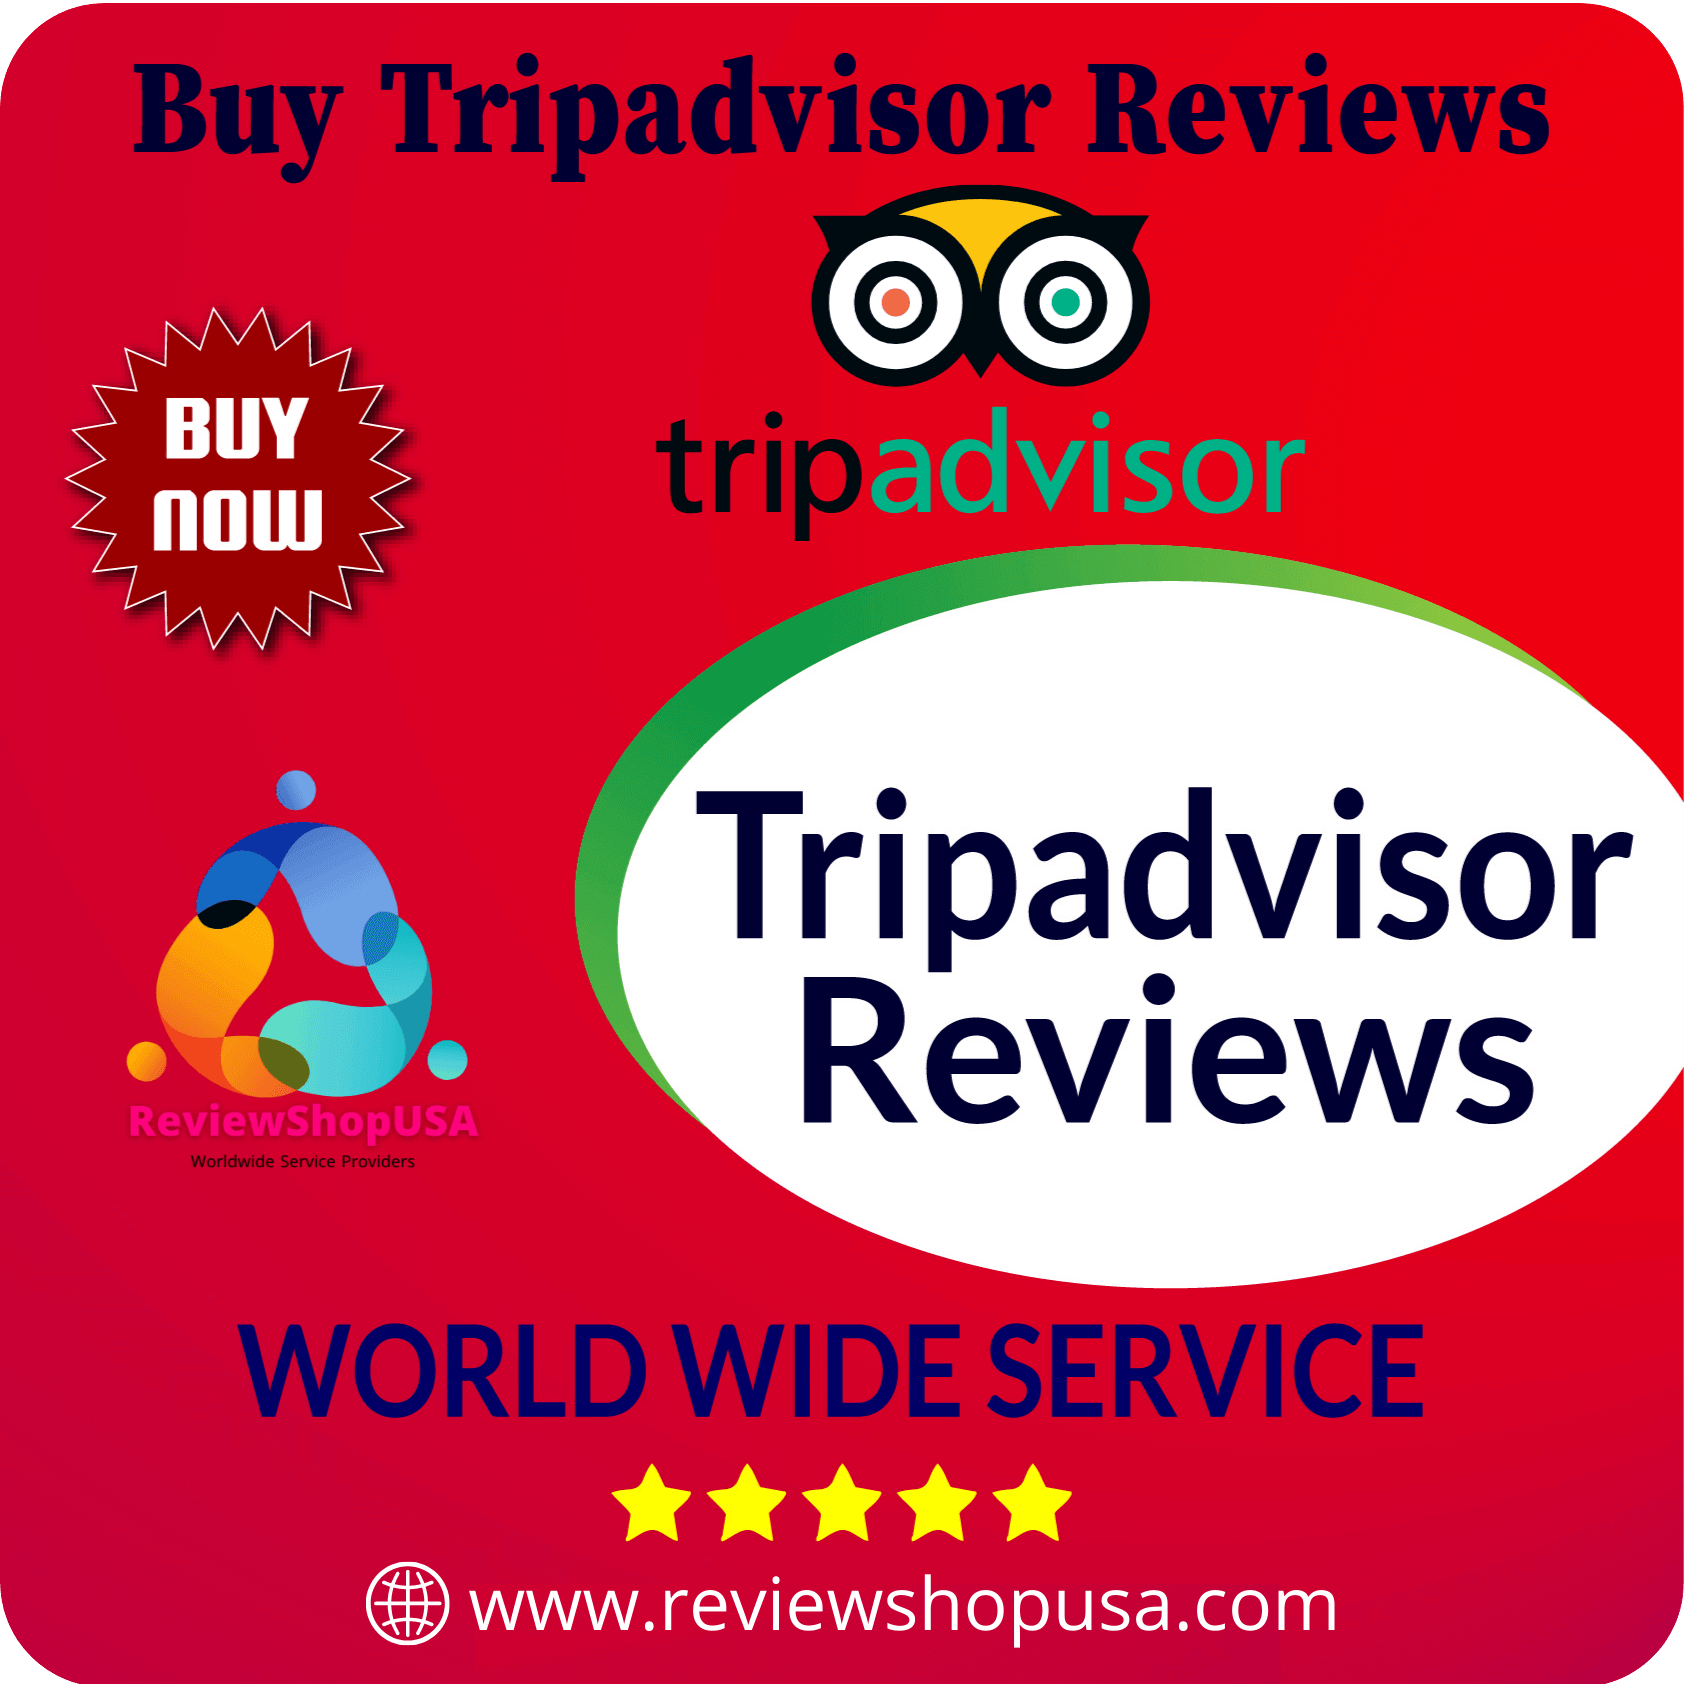 Buy TripAdvisor Reviews - 100% Non-Drop 5 Star TripAdvisor Reviews....